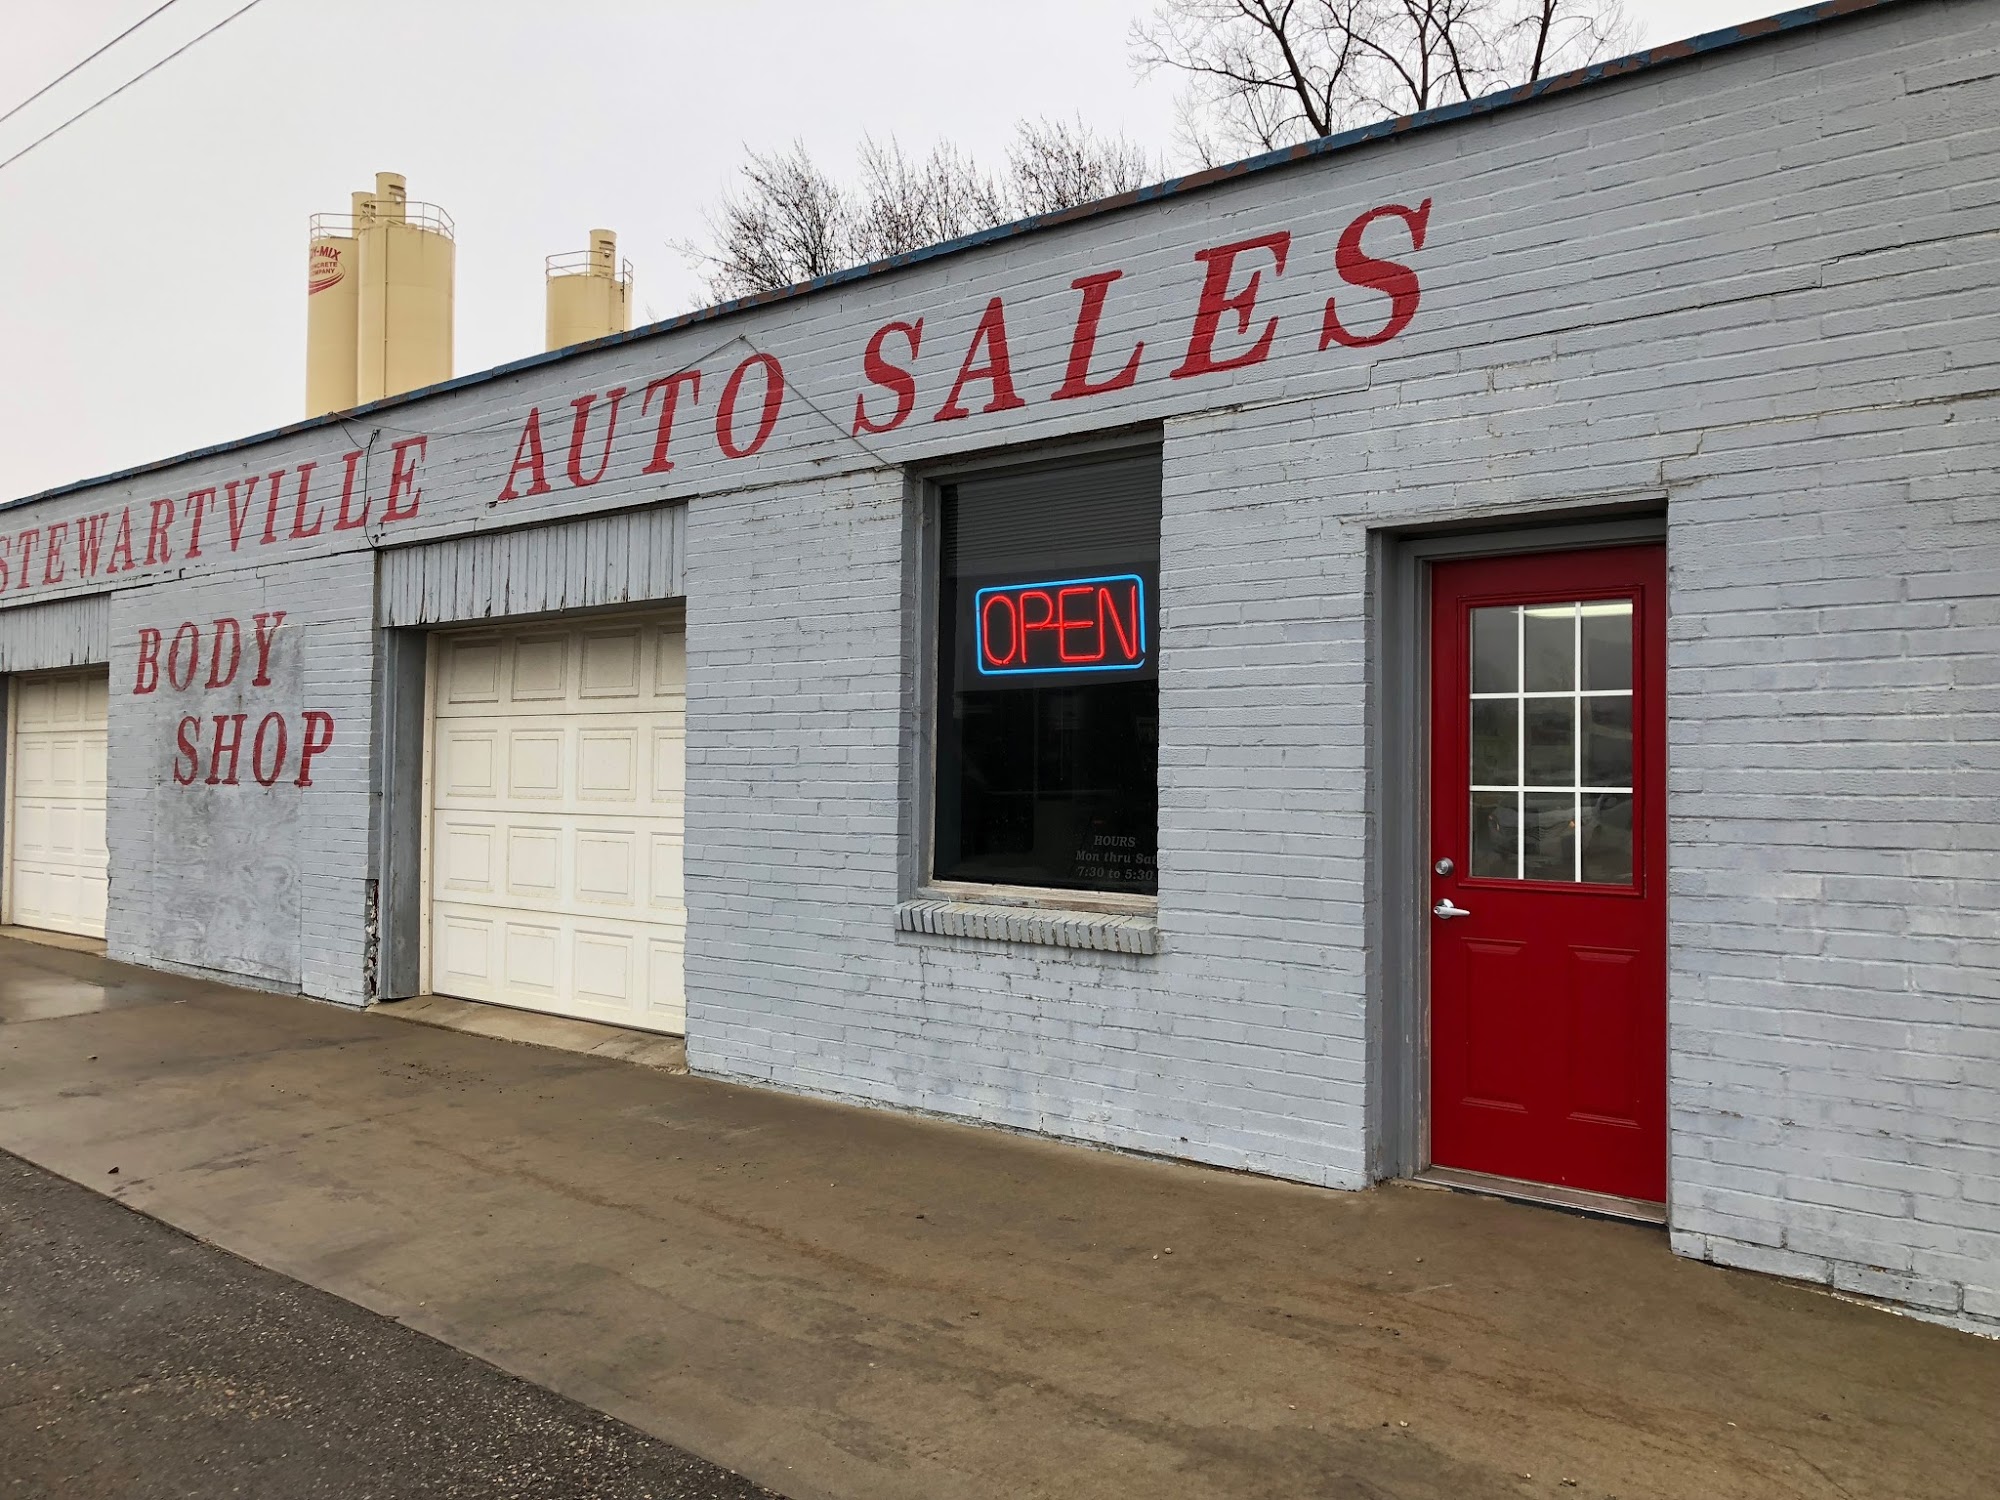 Stewartville Auto Sales & Body Shop